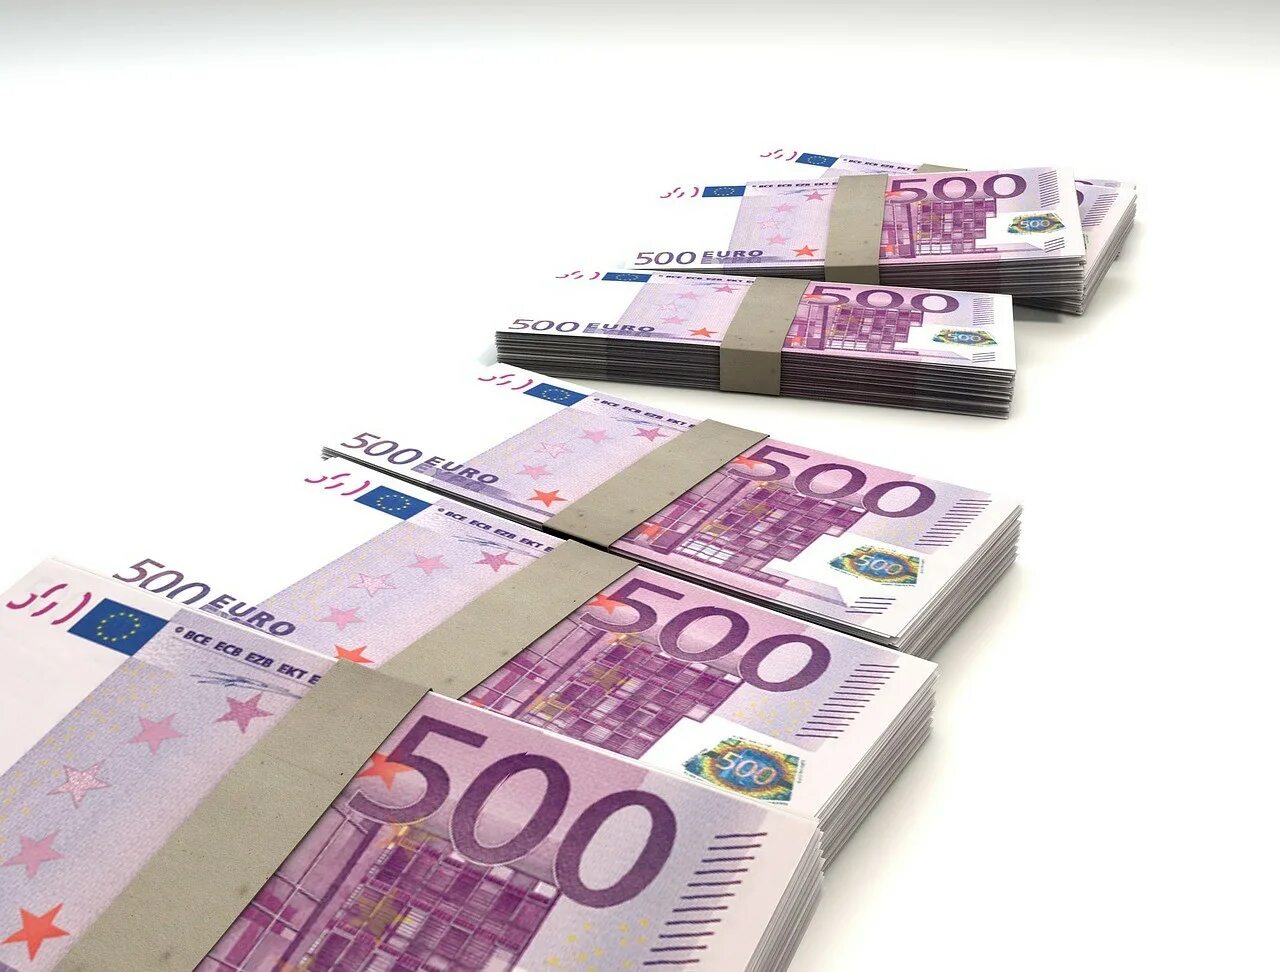 Тысяча евро в долларах. Деньги евро. 500 Евро. Пачки денег евро. Купюры евро.